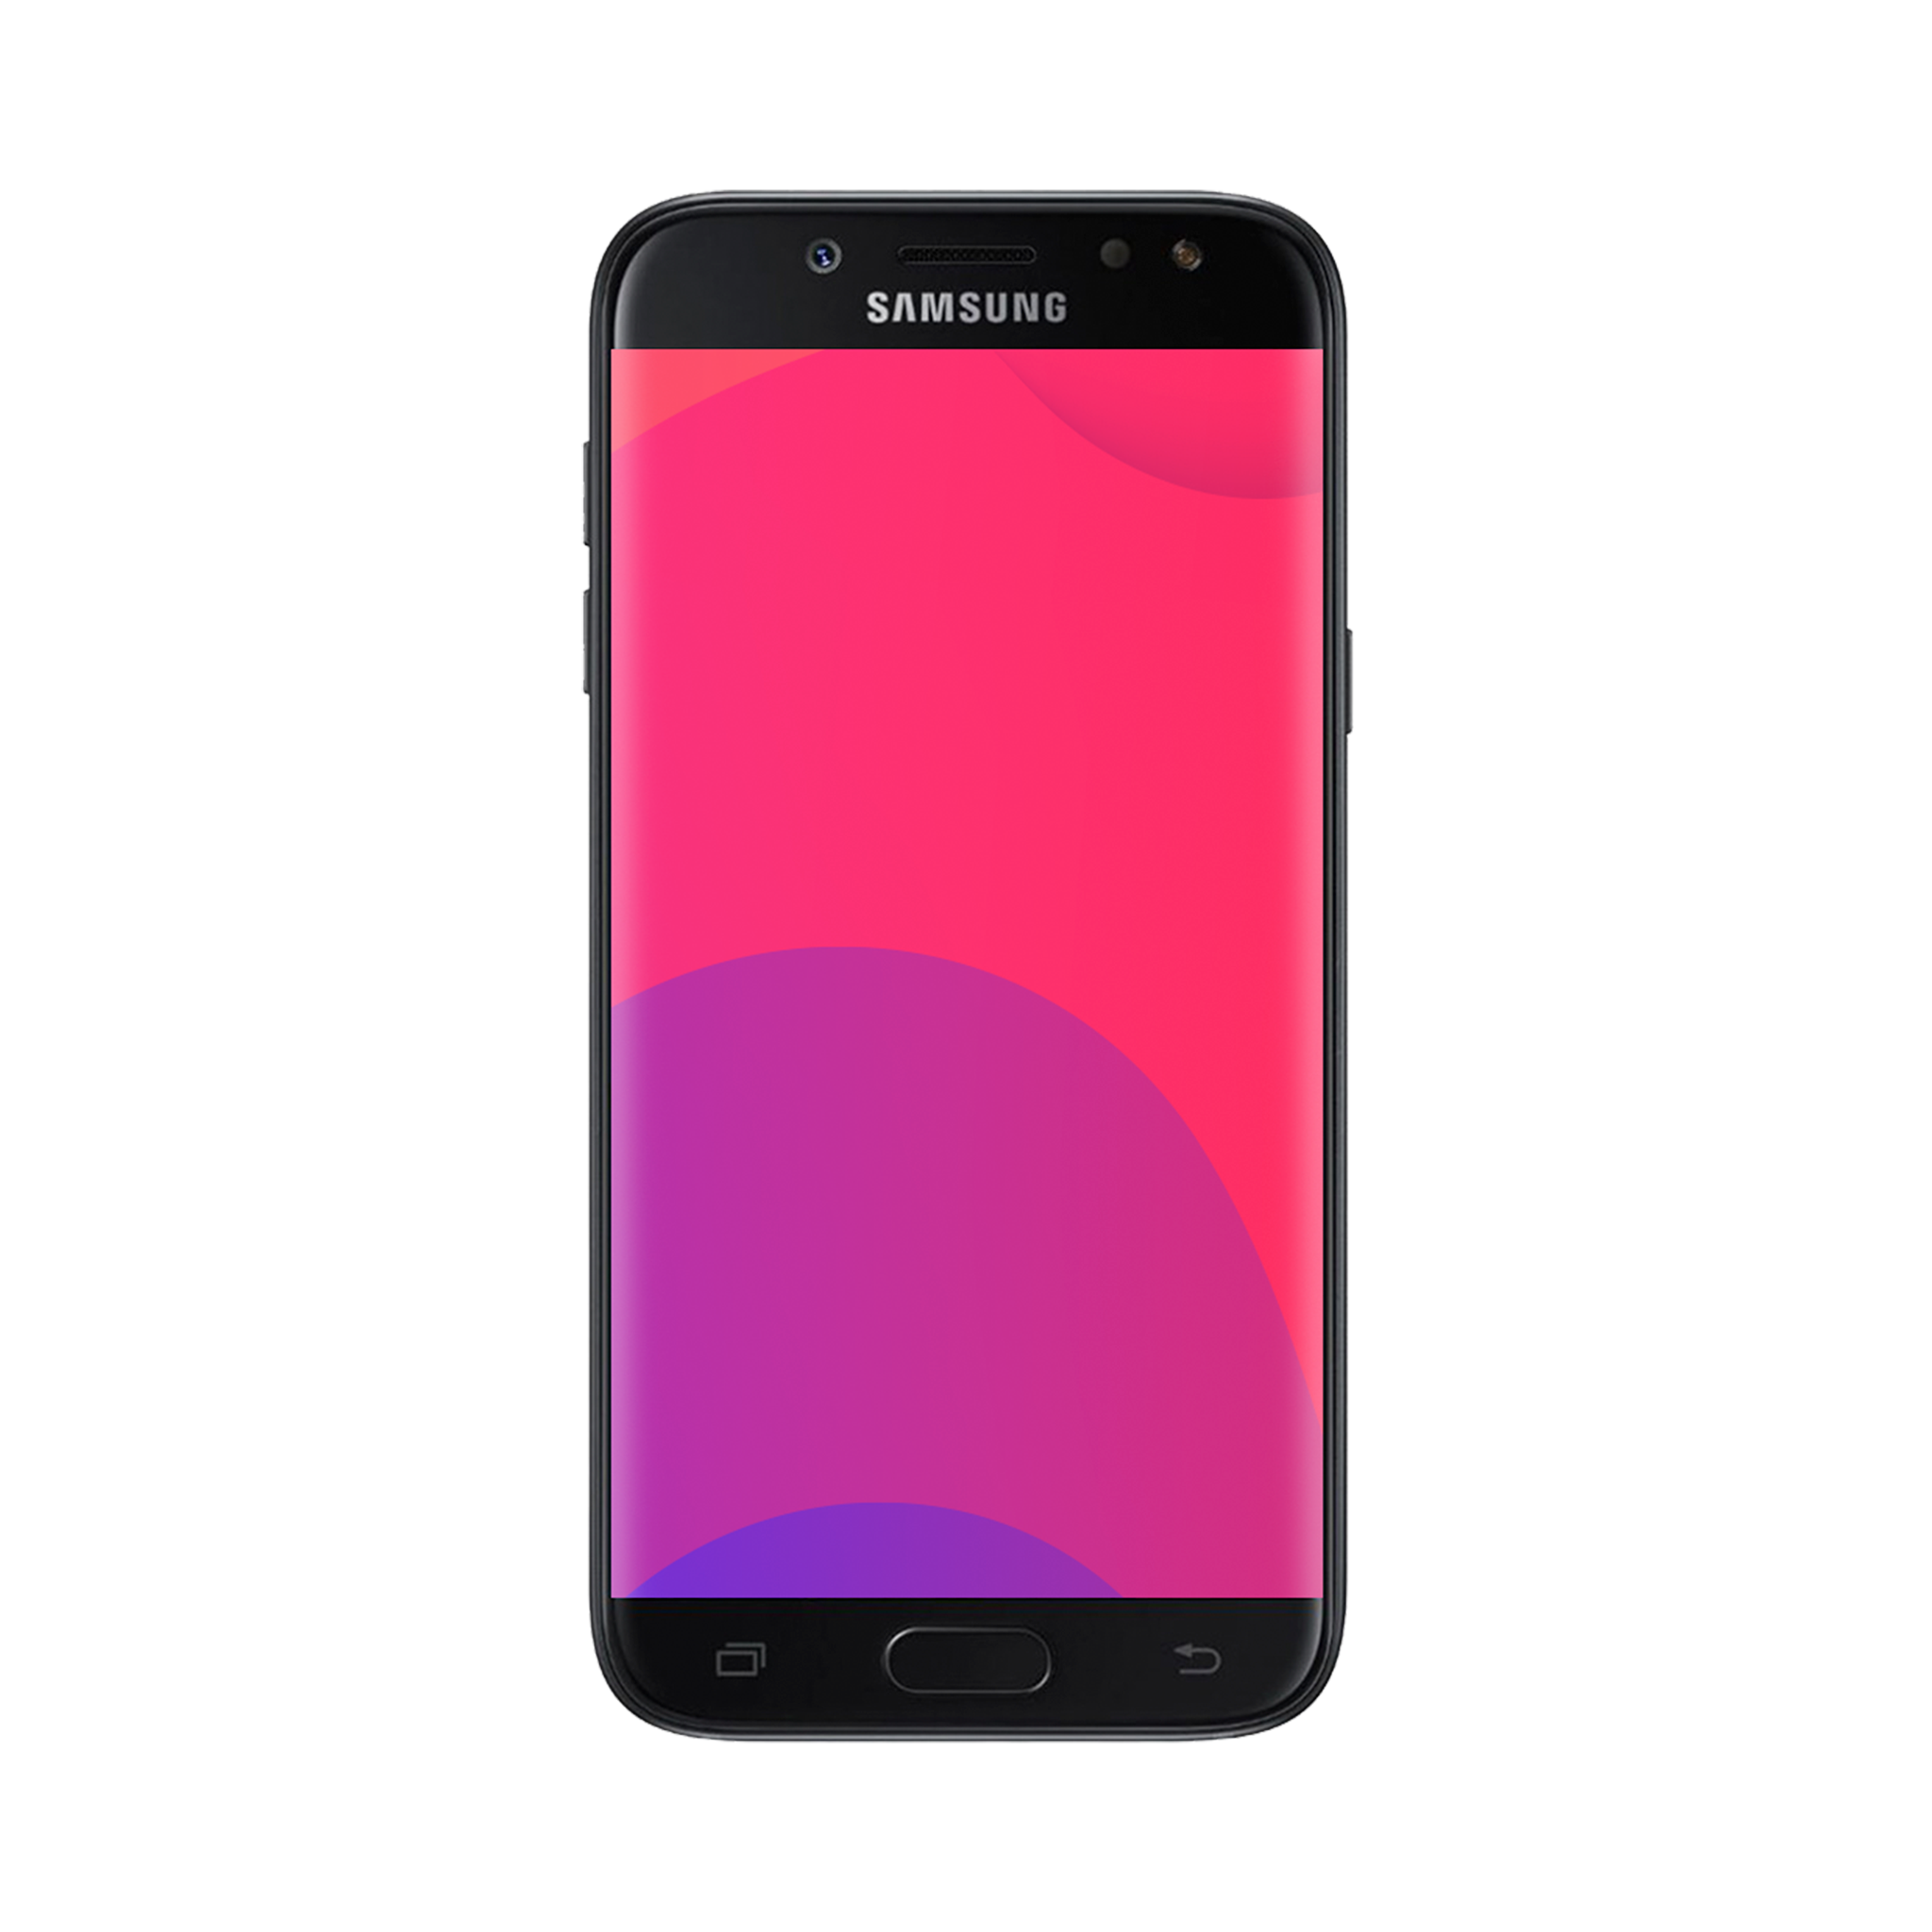 Samsung Galaxy J7 Pro 32GB Black